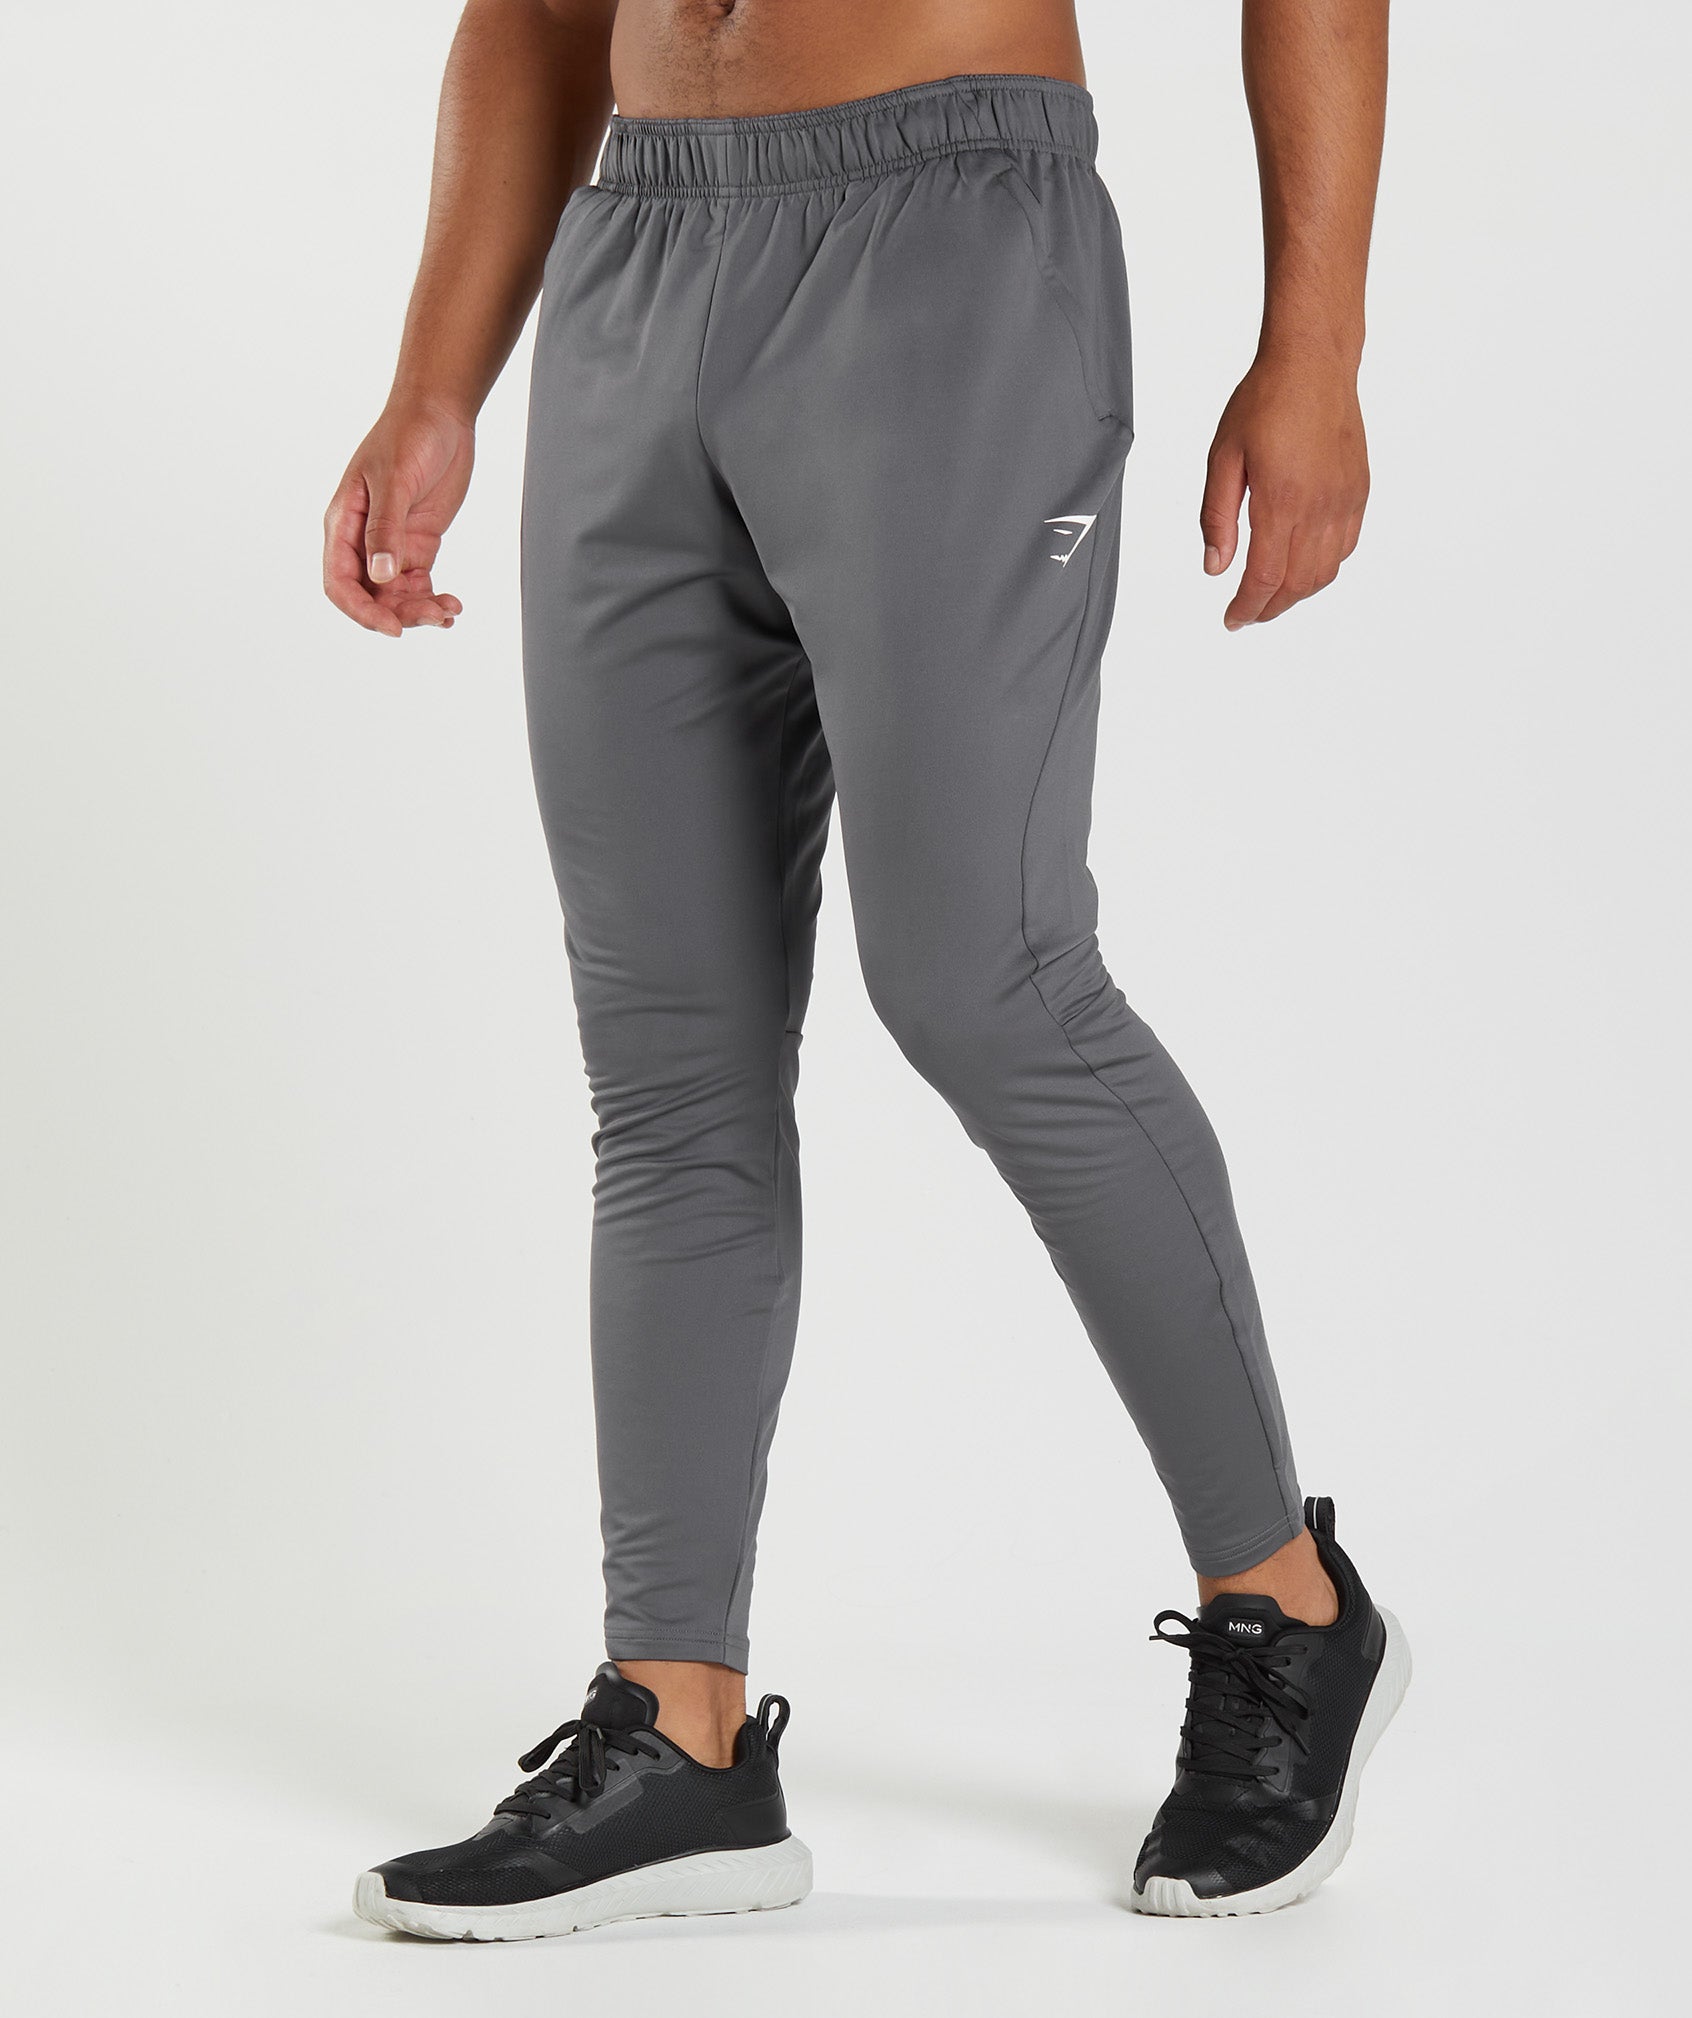 ALSLIAO Men Skinny Sweatpants Fit Sports Trousers Bottoms Slim Gym Workout  Joggers Pants Light Grey XXXL 